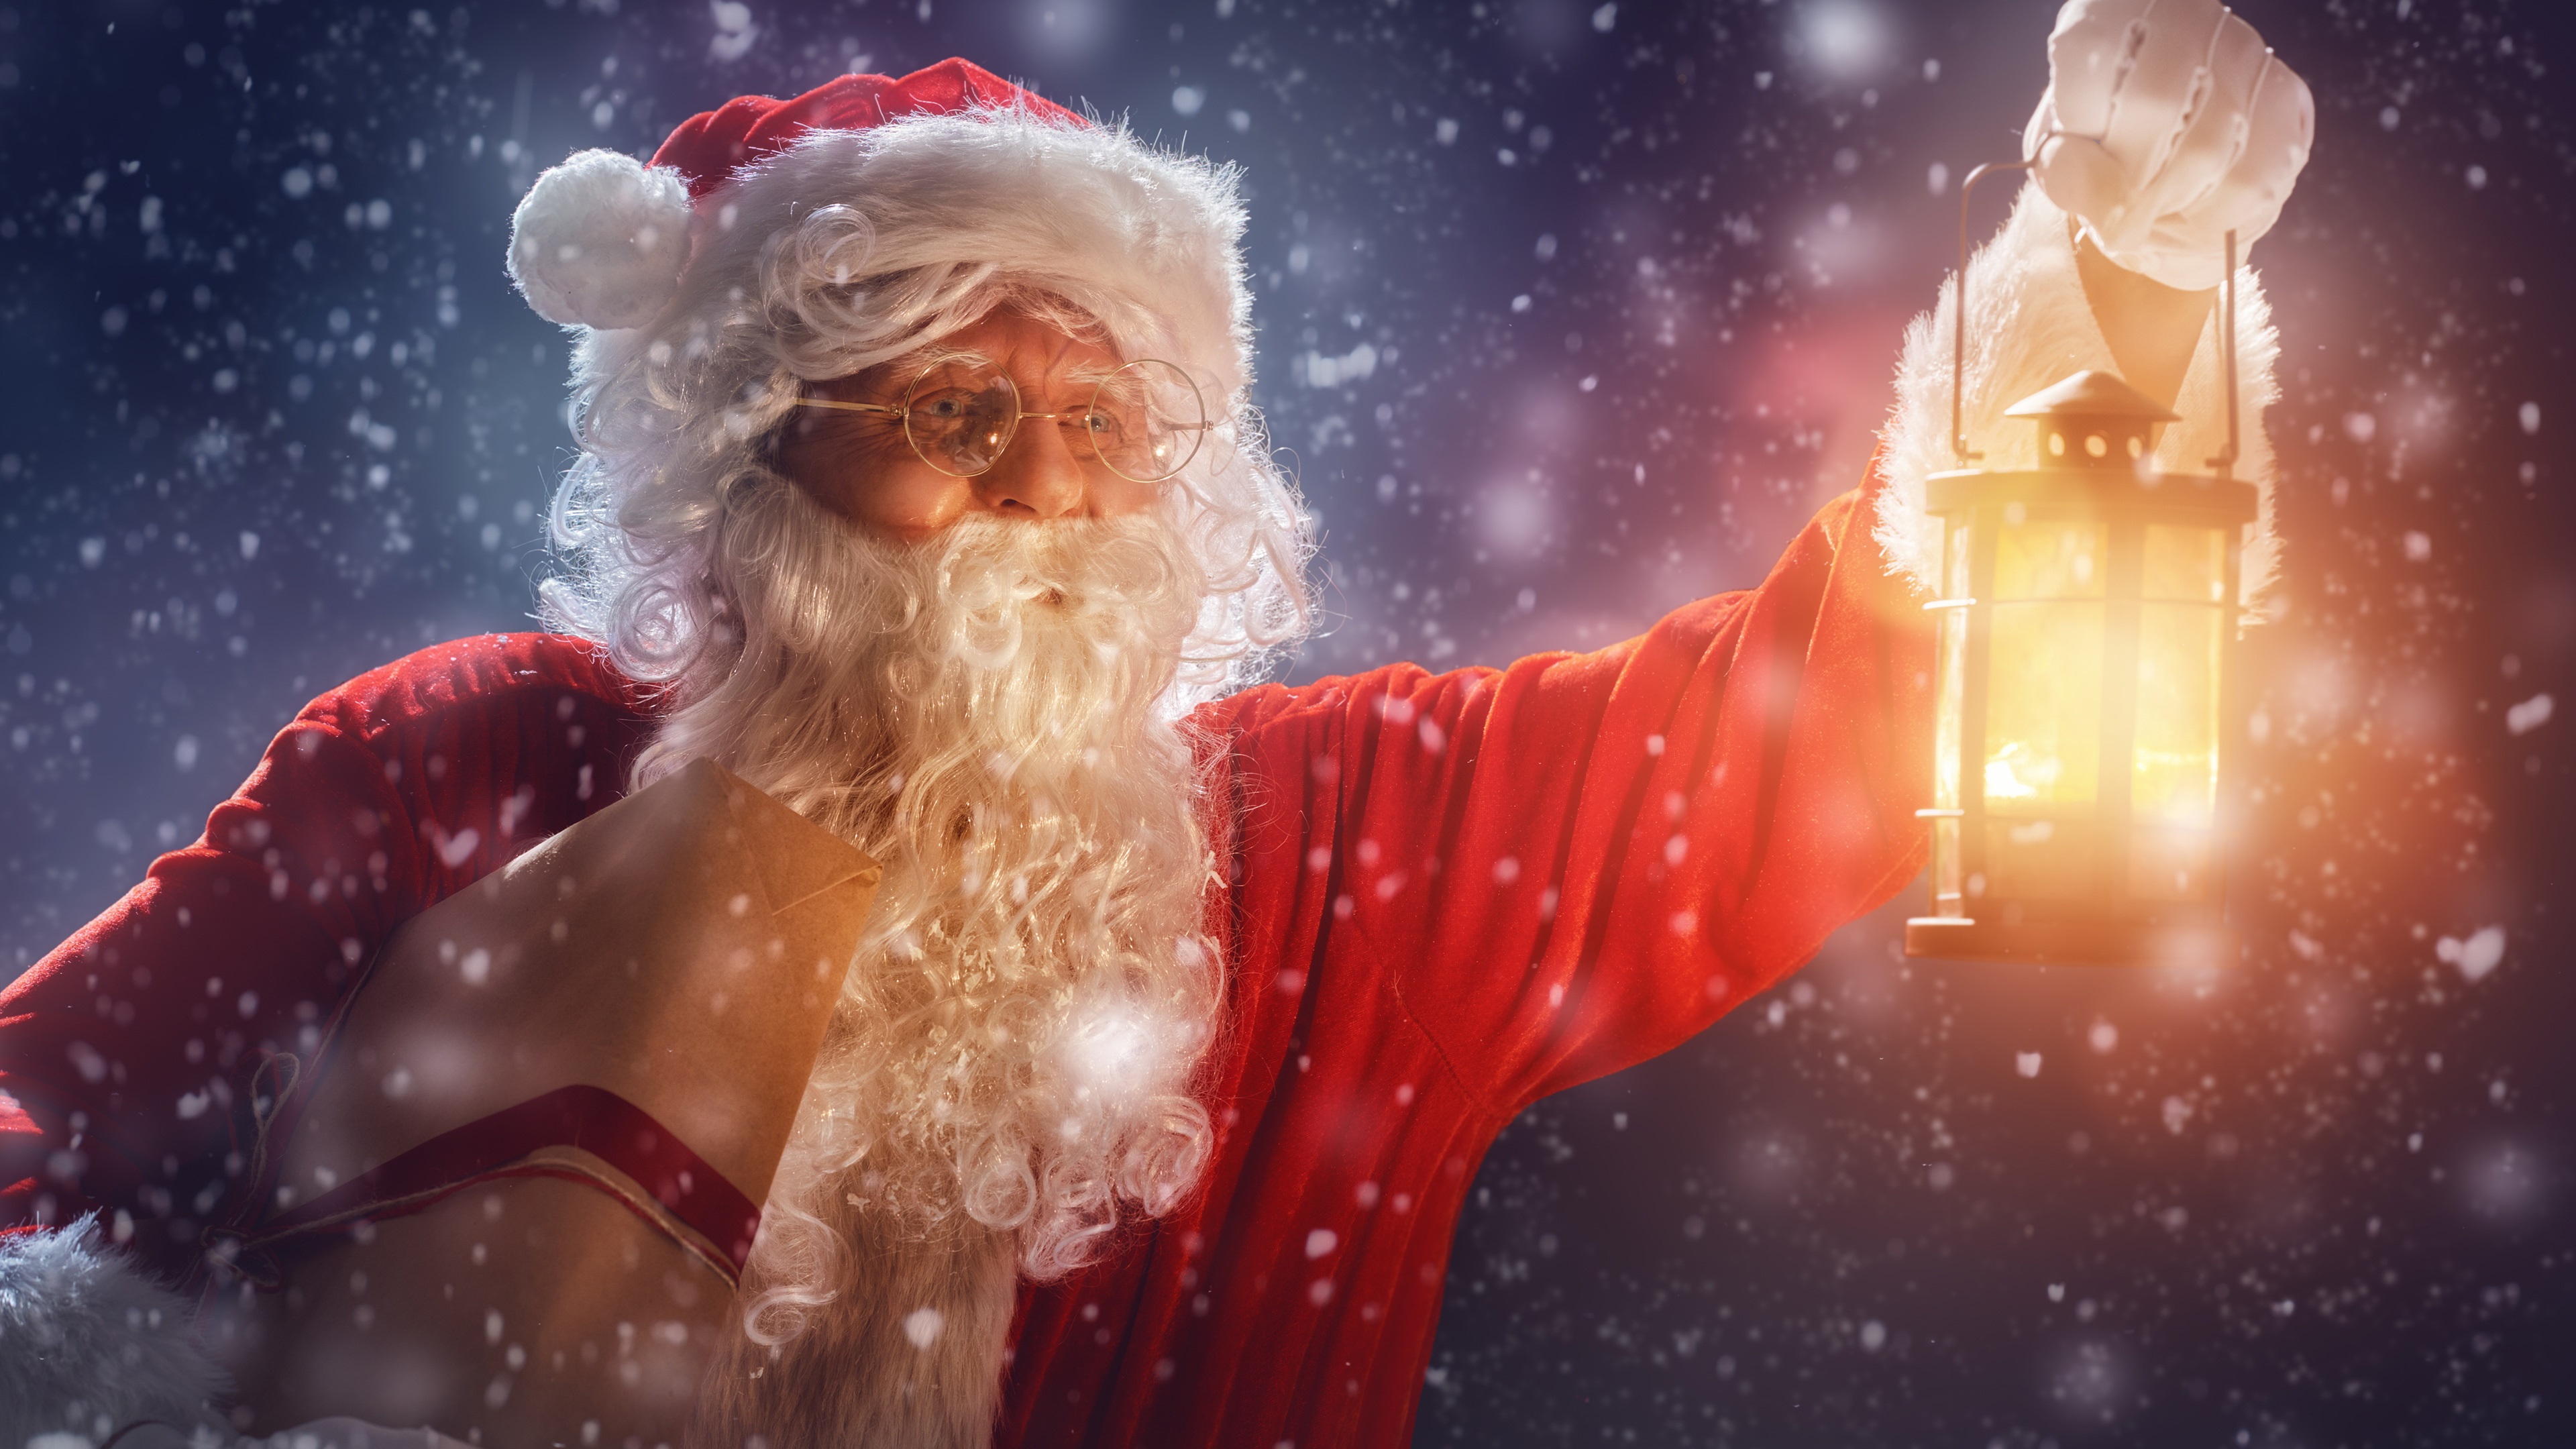 Christmas Images Of Santa Best Top Popular Incredible Christmas Greetings Card